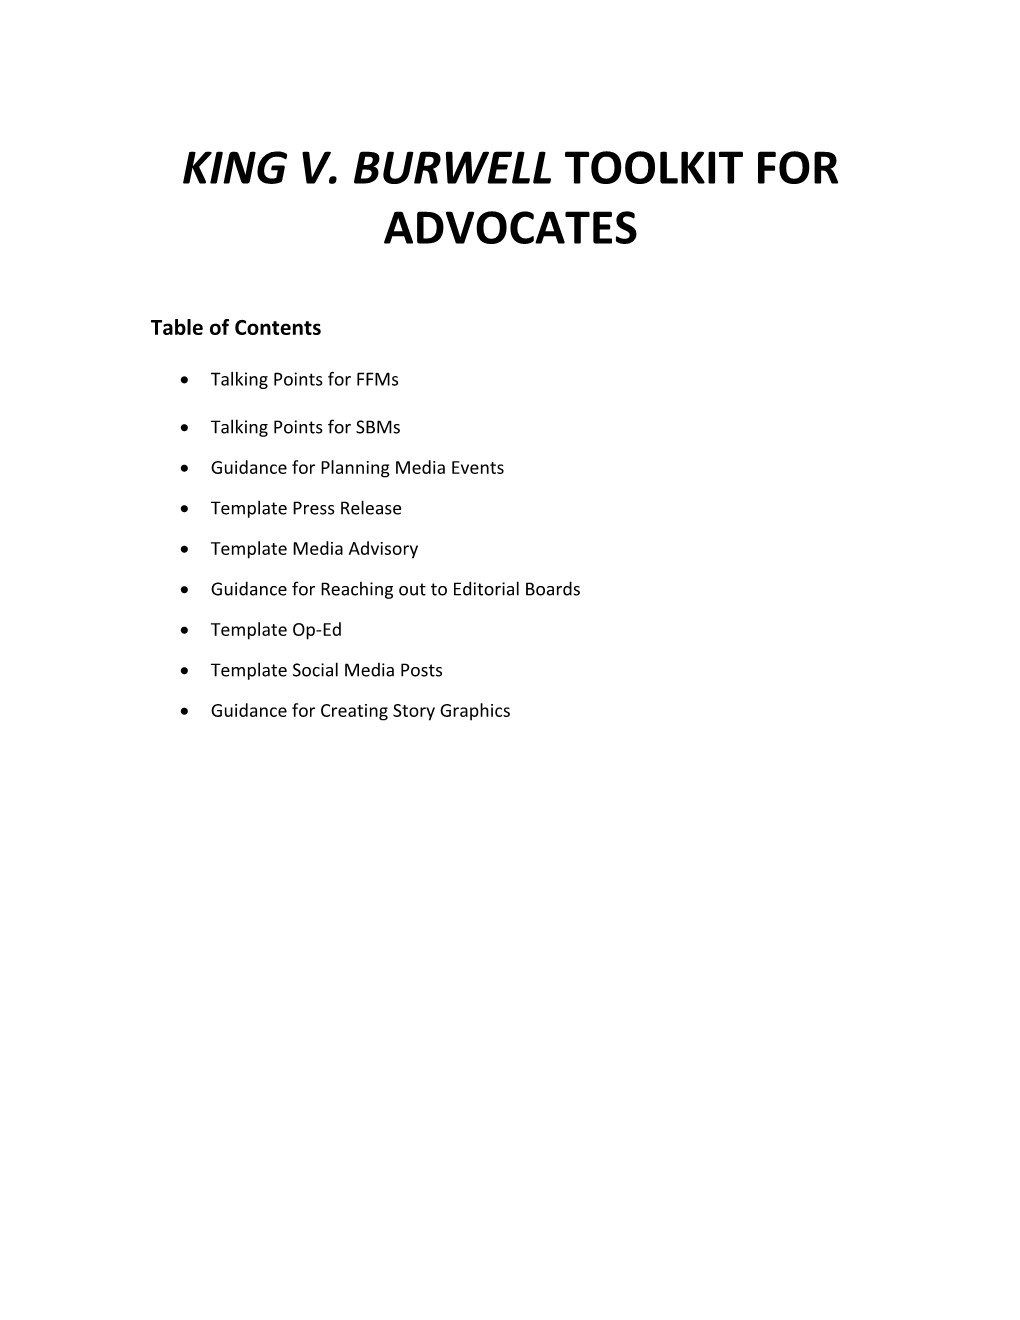 King V. Burwell Toolkit for Advocates